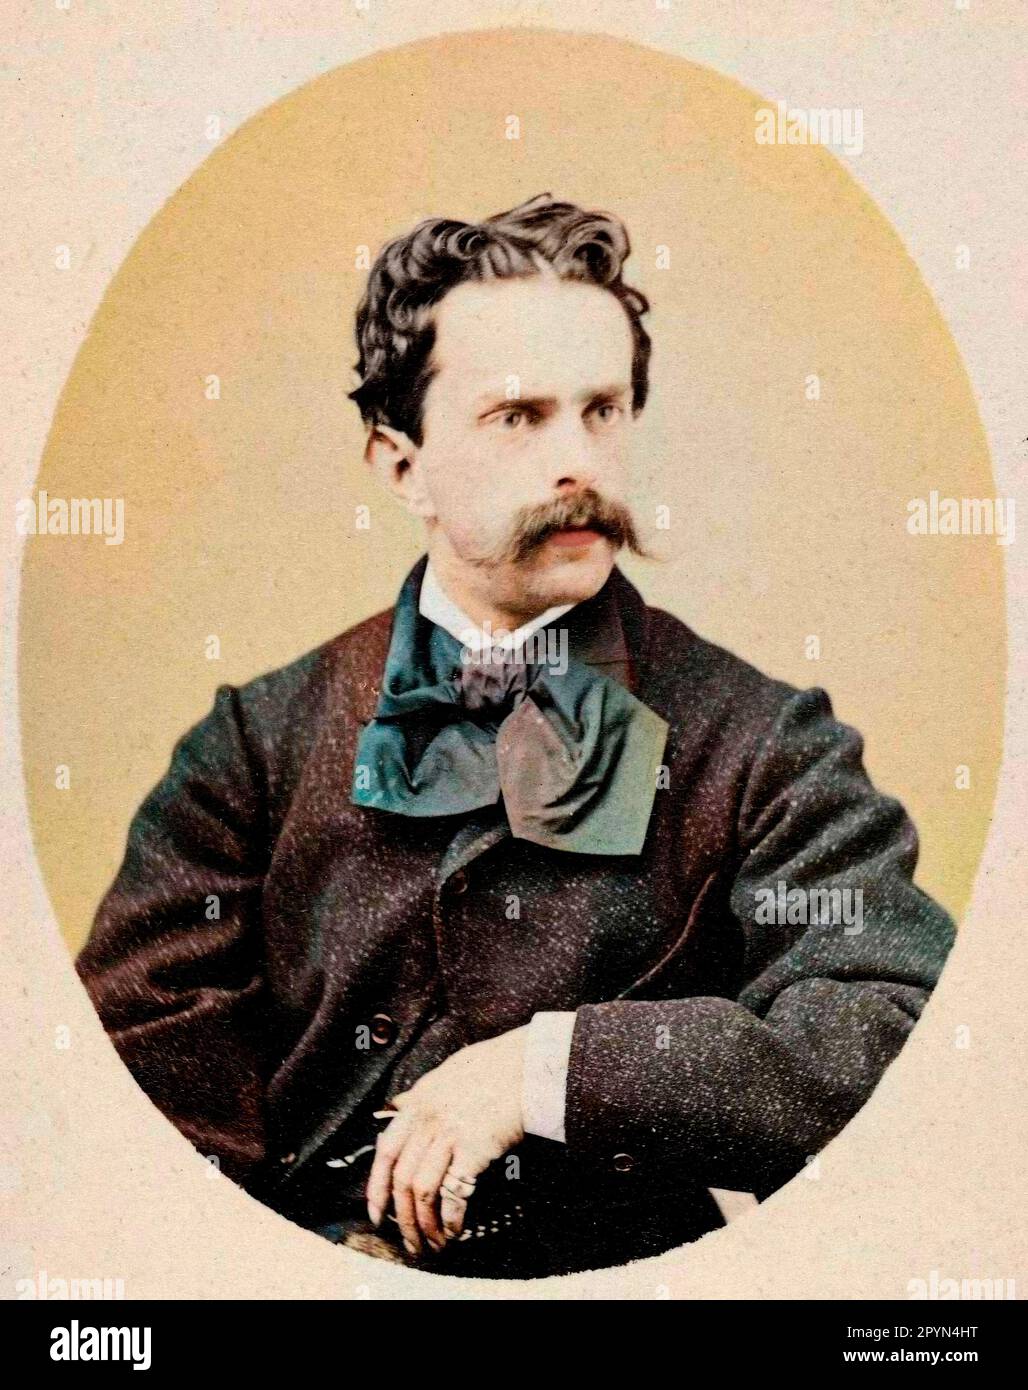 Portrait de Humbert Ier (Umberto I, 1844-1900), roi d'Italie - Umberto I d'Italie Banque D'Images